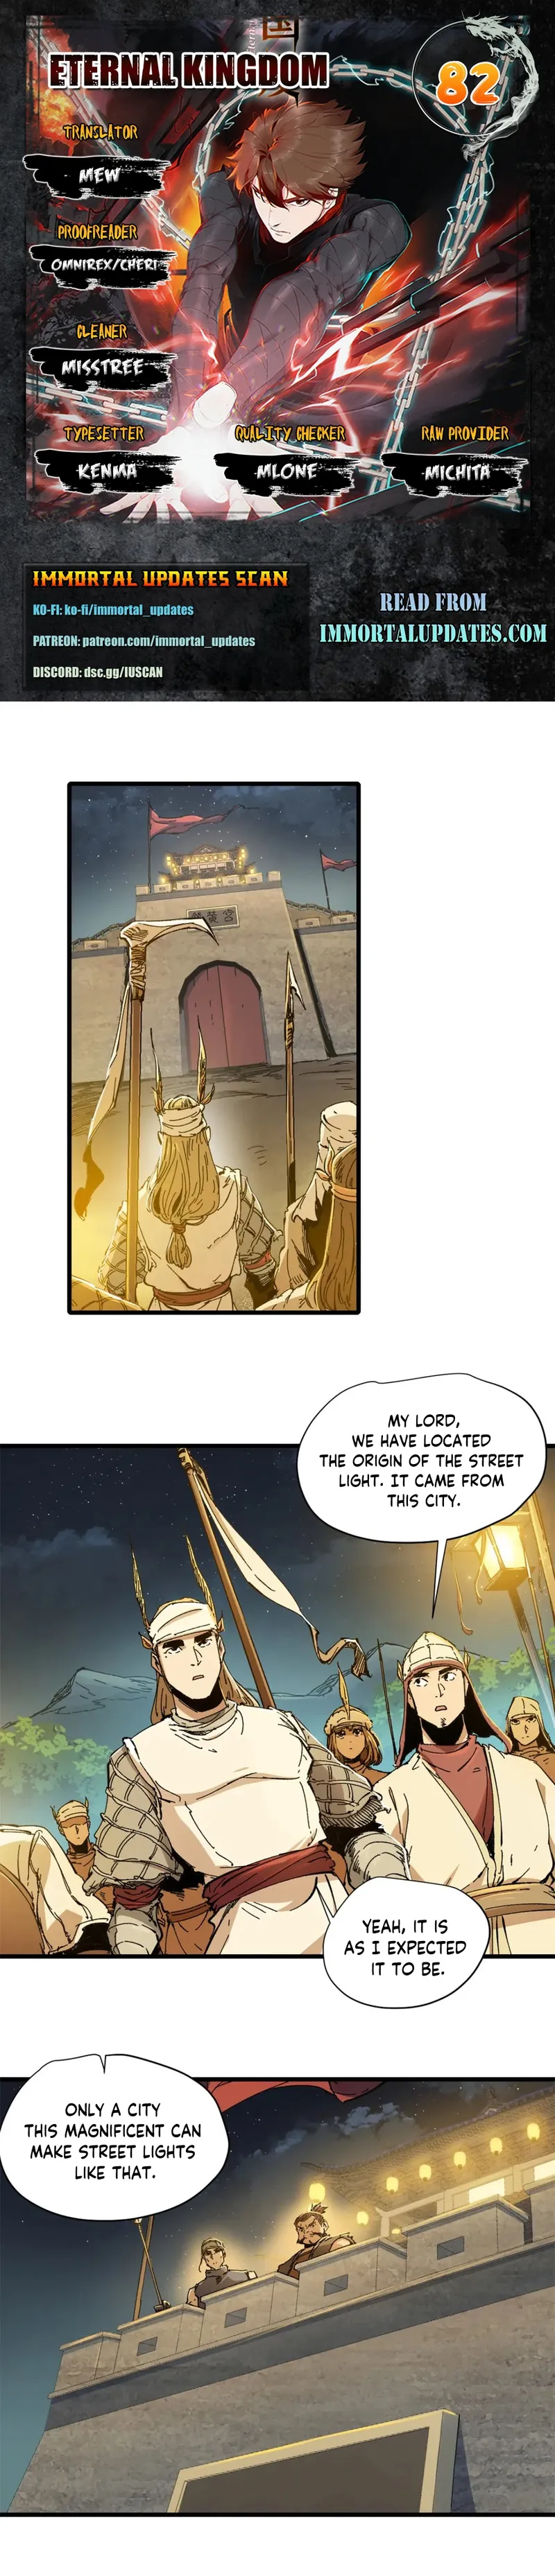 Eternal Kingdom - Page 1